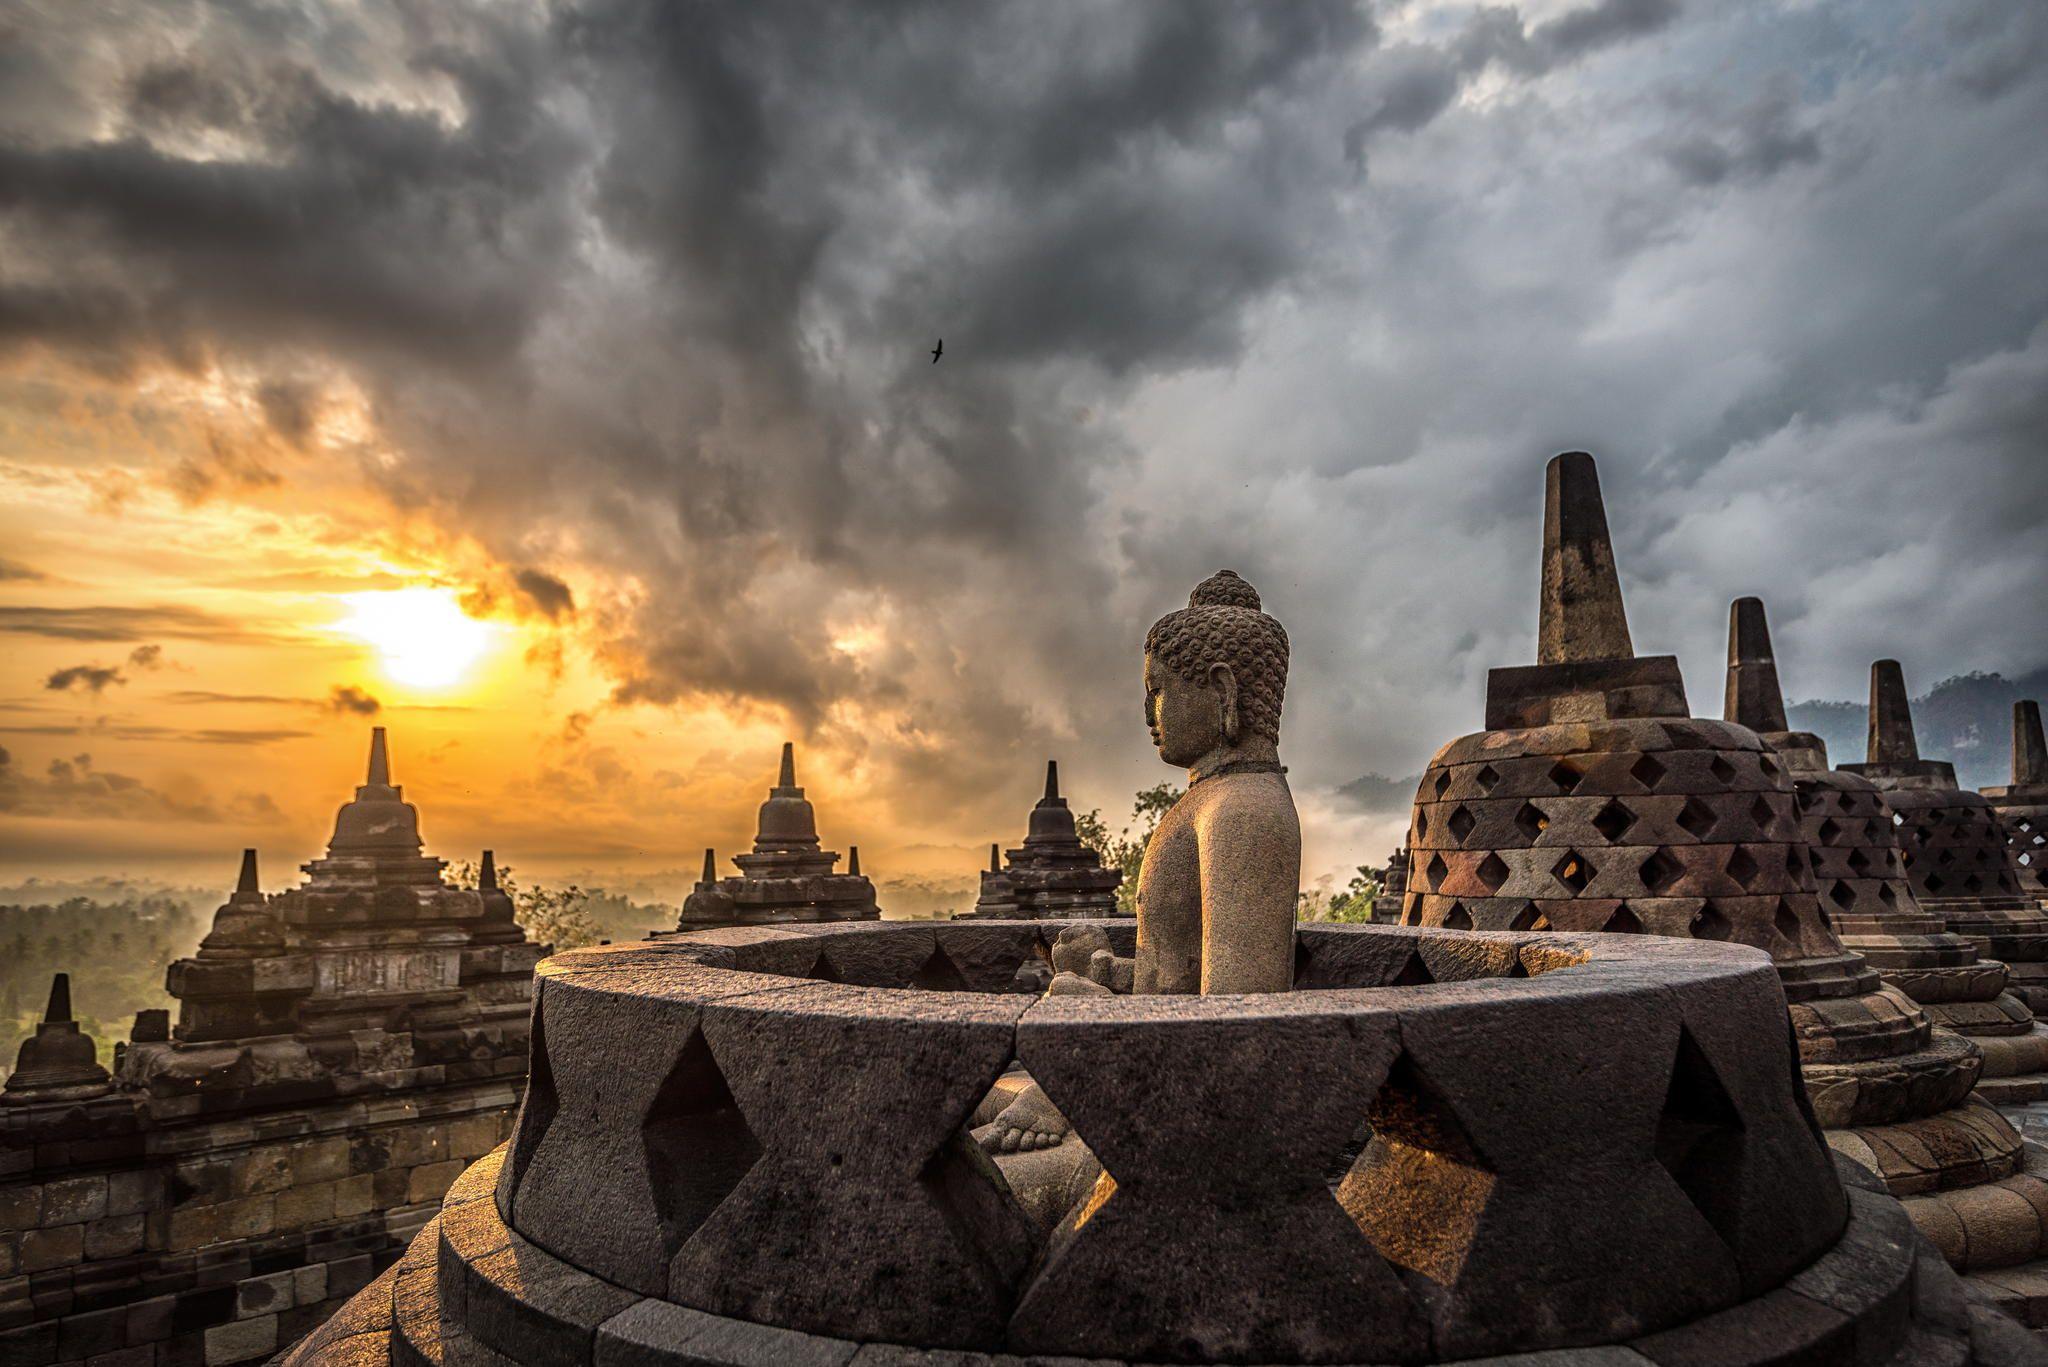 30000 Candi Borobudur Pictures  Download Free Images on Unsplash